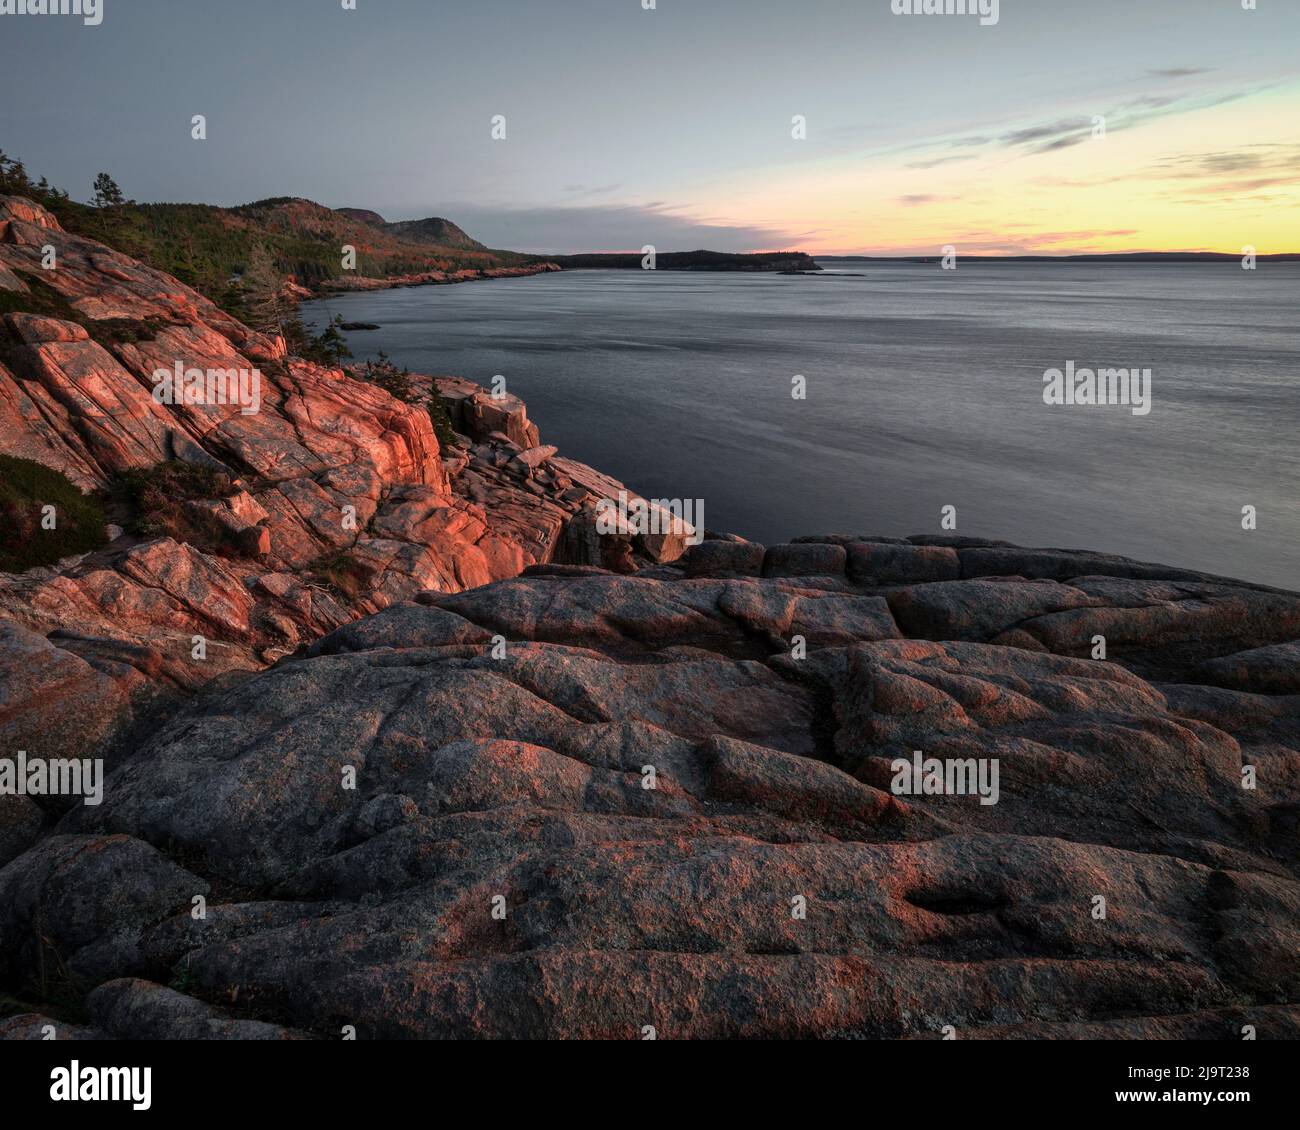 USA, Maine, Acadia National Park. Sunrise on ocean coastline. Stock Photo